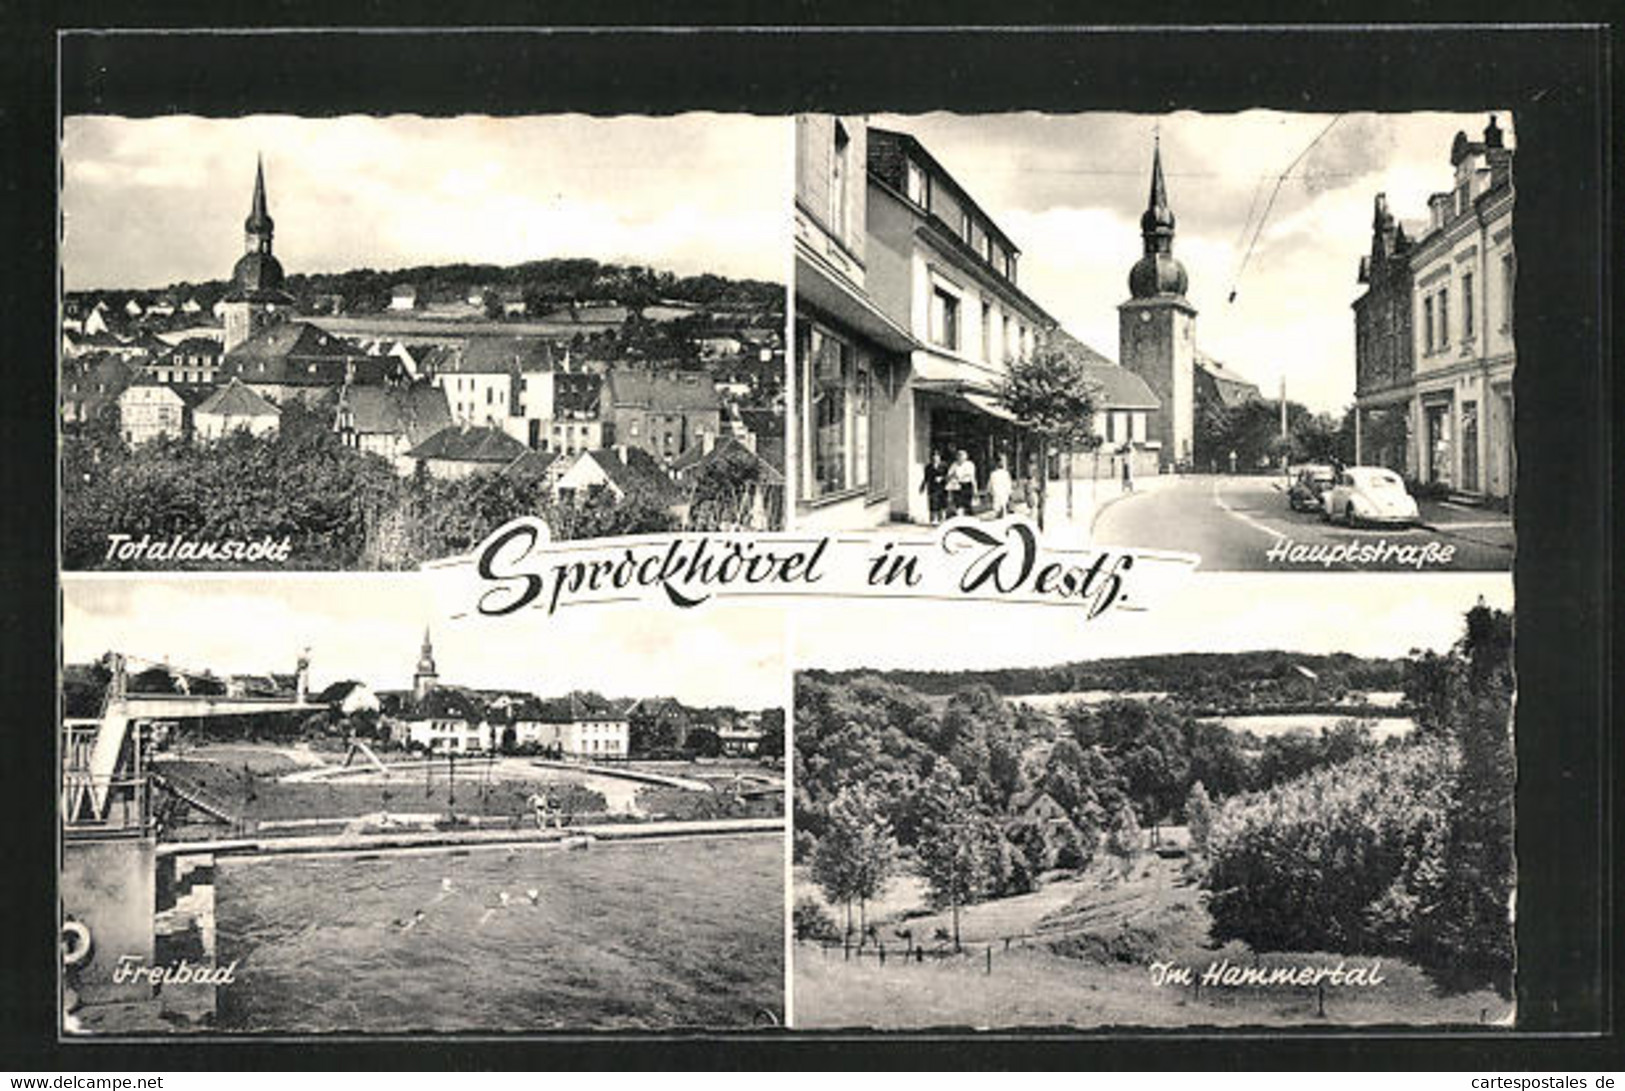 AK Sprockhövel /Westf., Totalansicht, Freibad, Hauptstrasse, Im Hammertal - Sprockhoevel